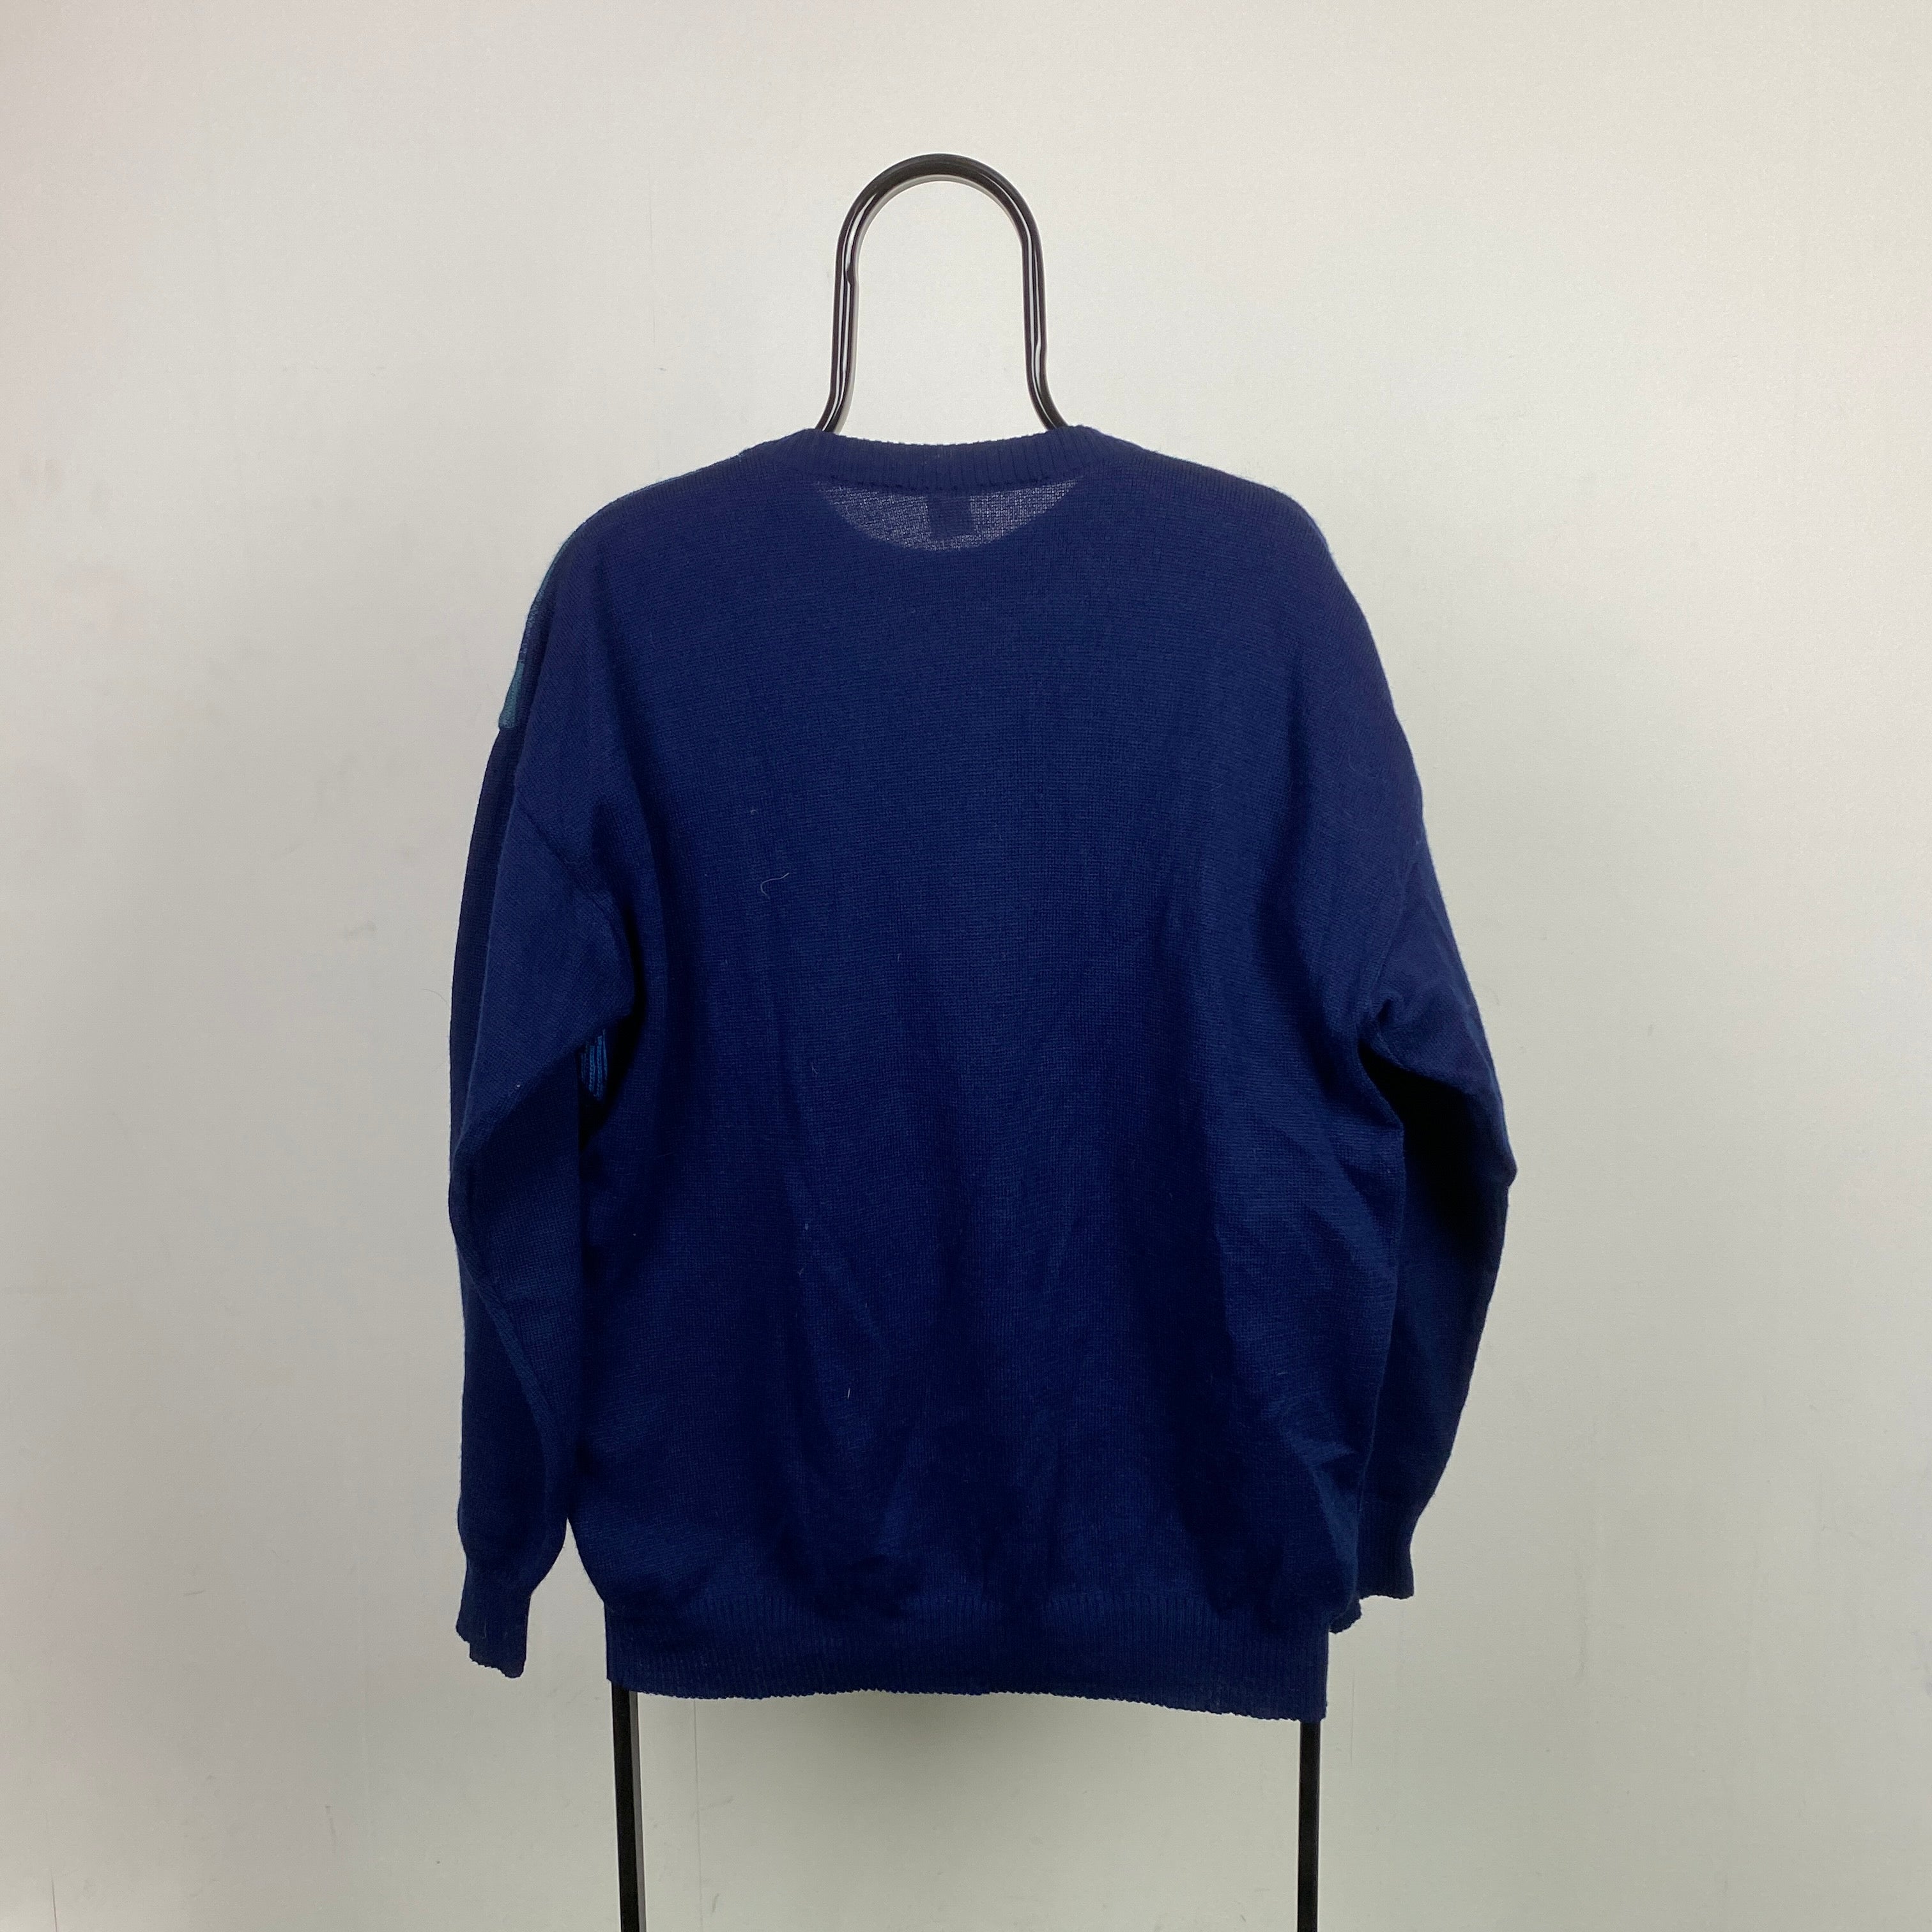 Retro Knit Sweatshirt Blue XL